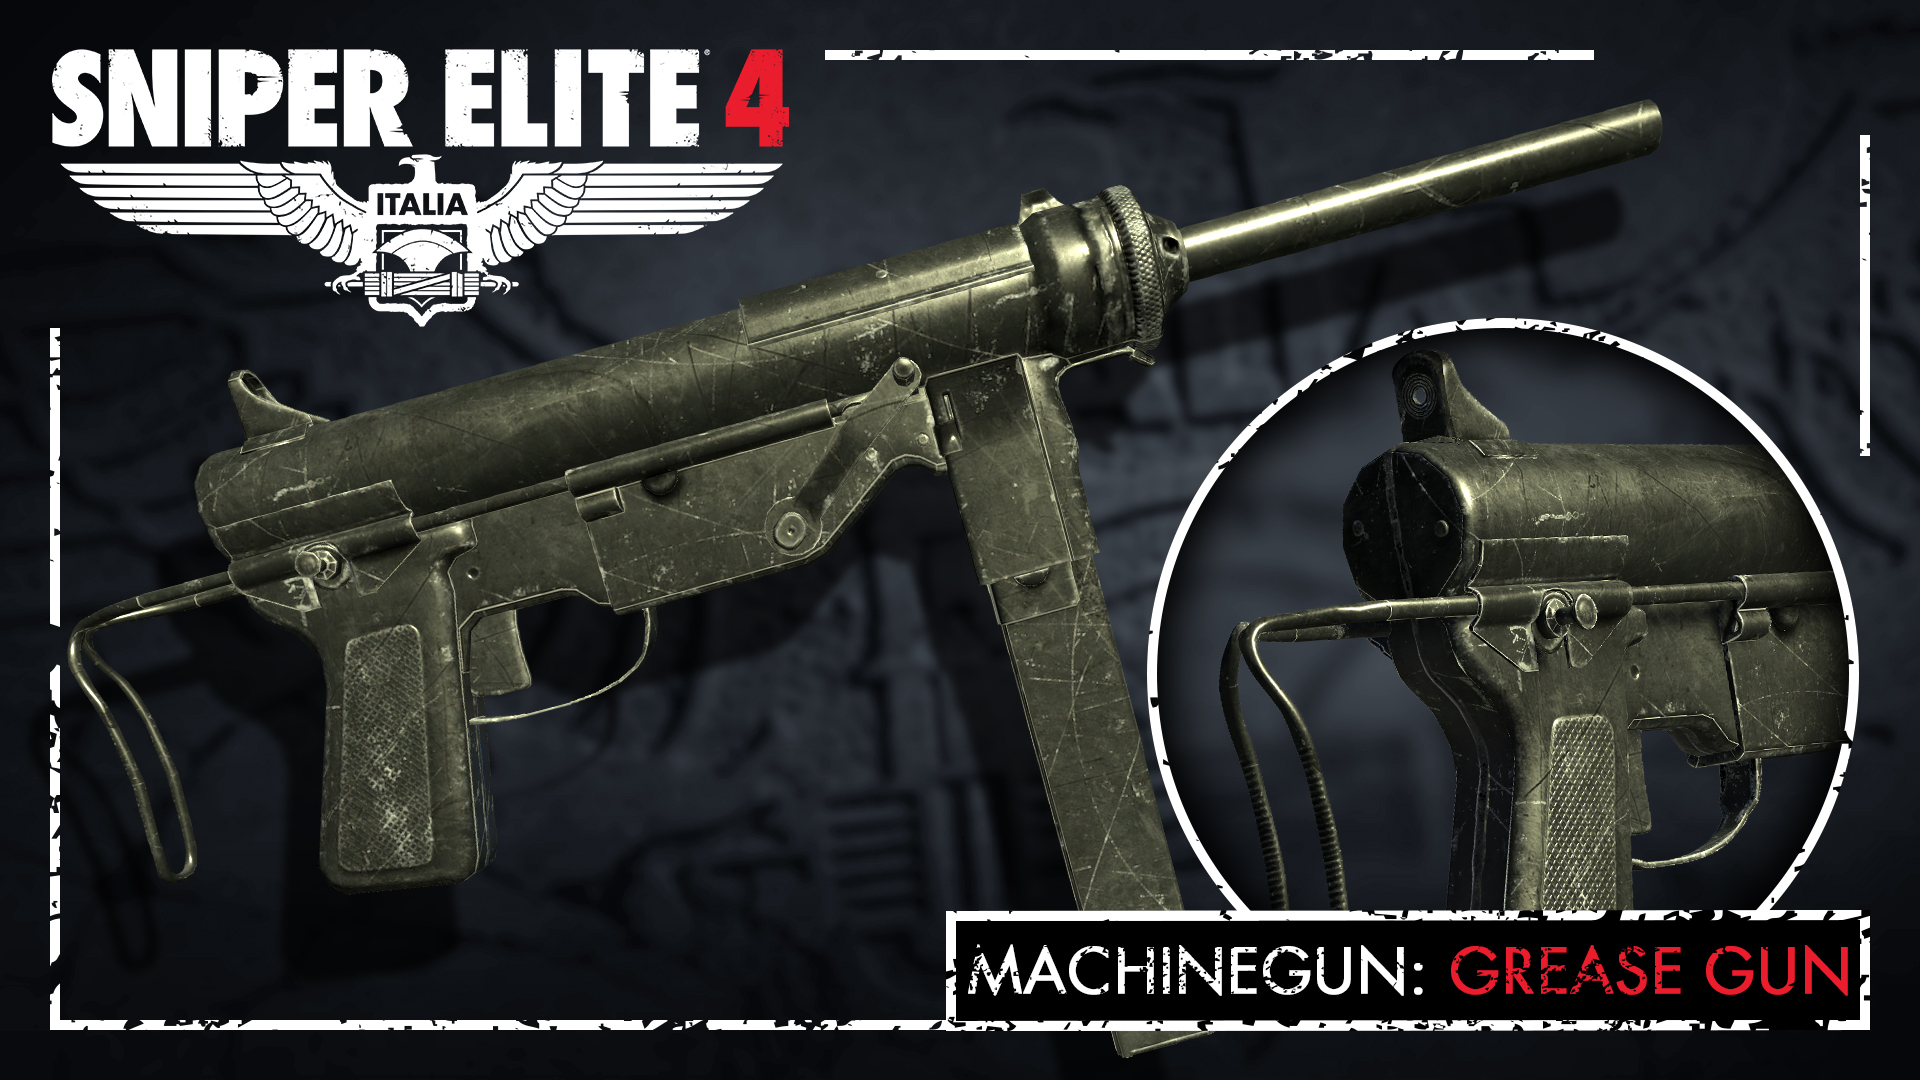 Sniper Elite 4 - Silent Warfare Weapons Pack Featured Screenshot #1